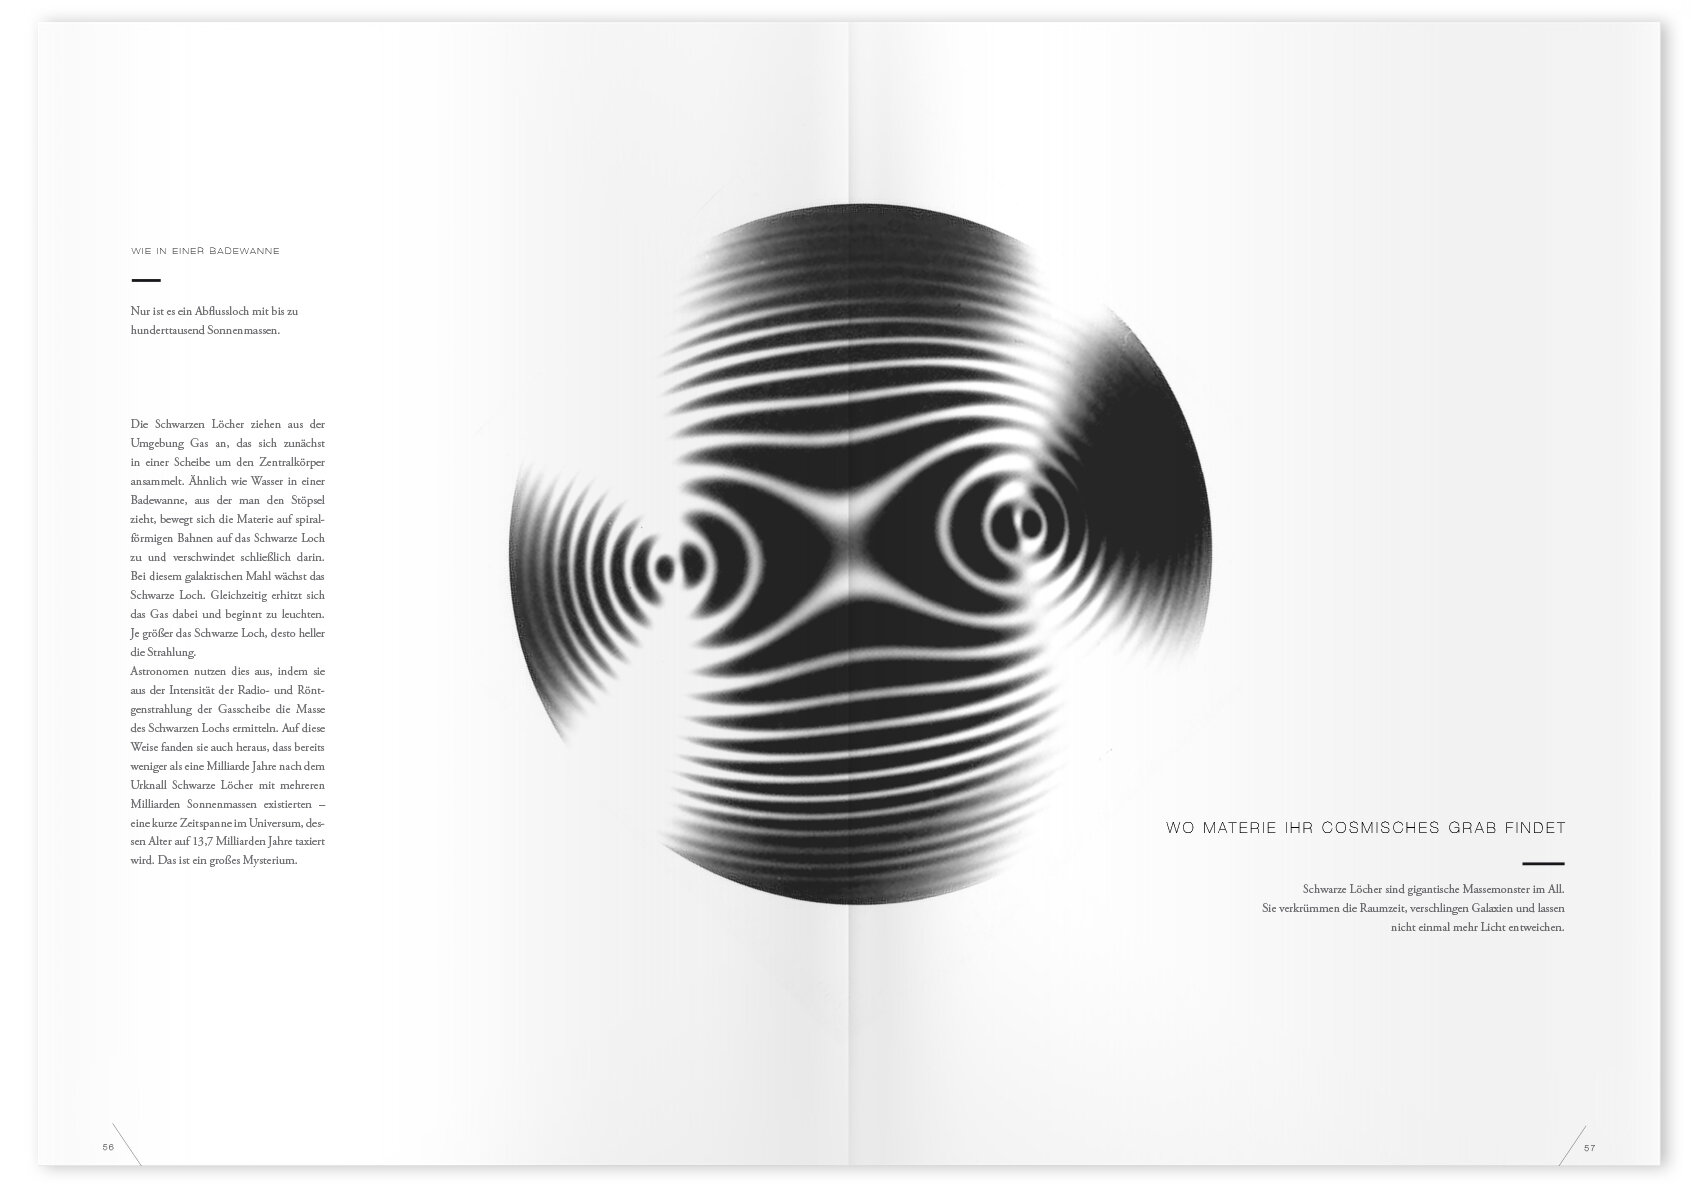 12_Cosmos-Magazin_hsrm-Hochschule-RheinMain_Editorial-Design_Grafikdesign_Gloria-Kison.jpg